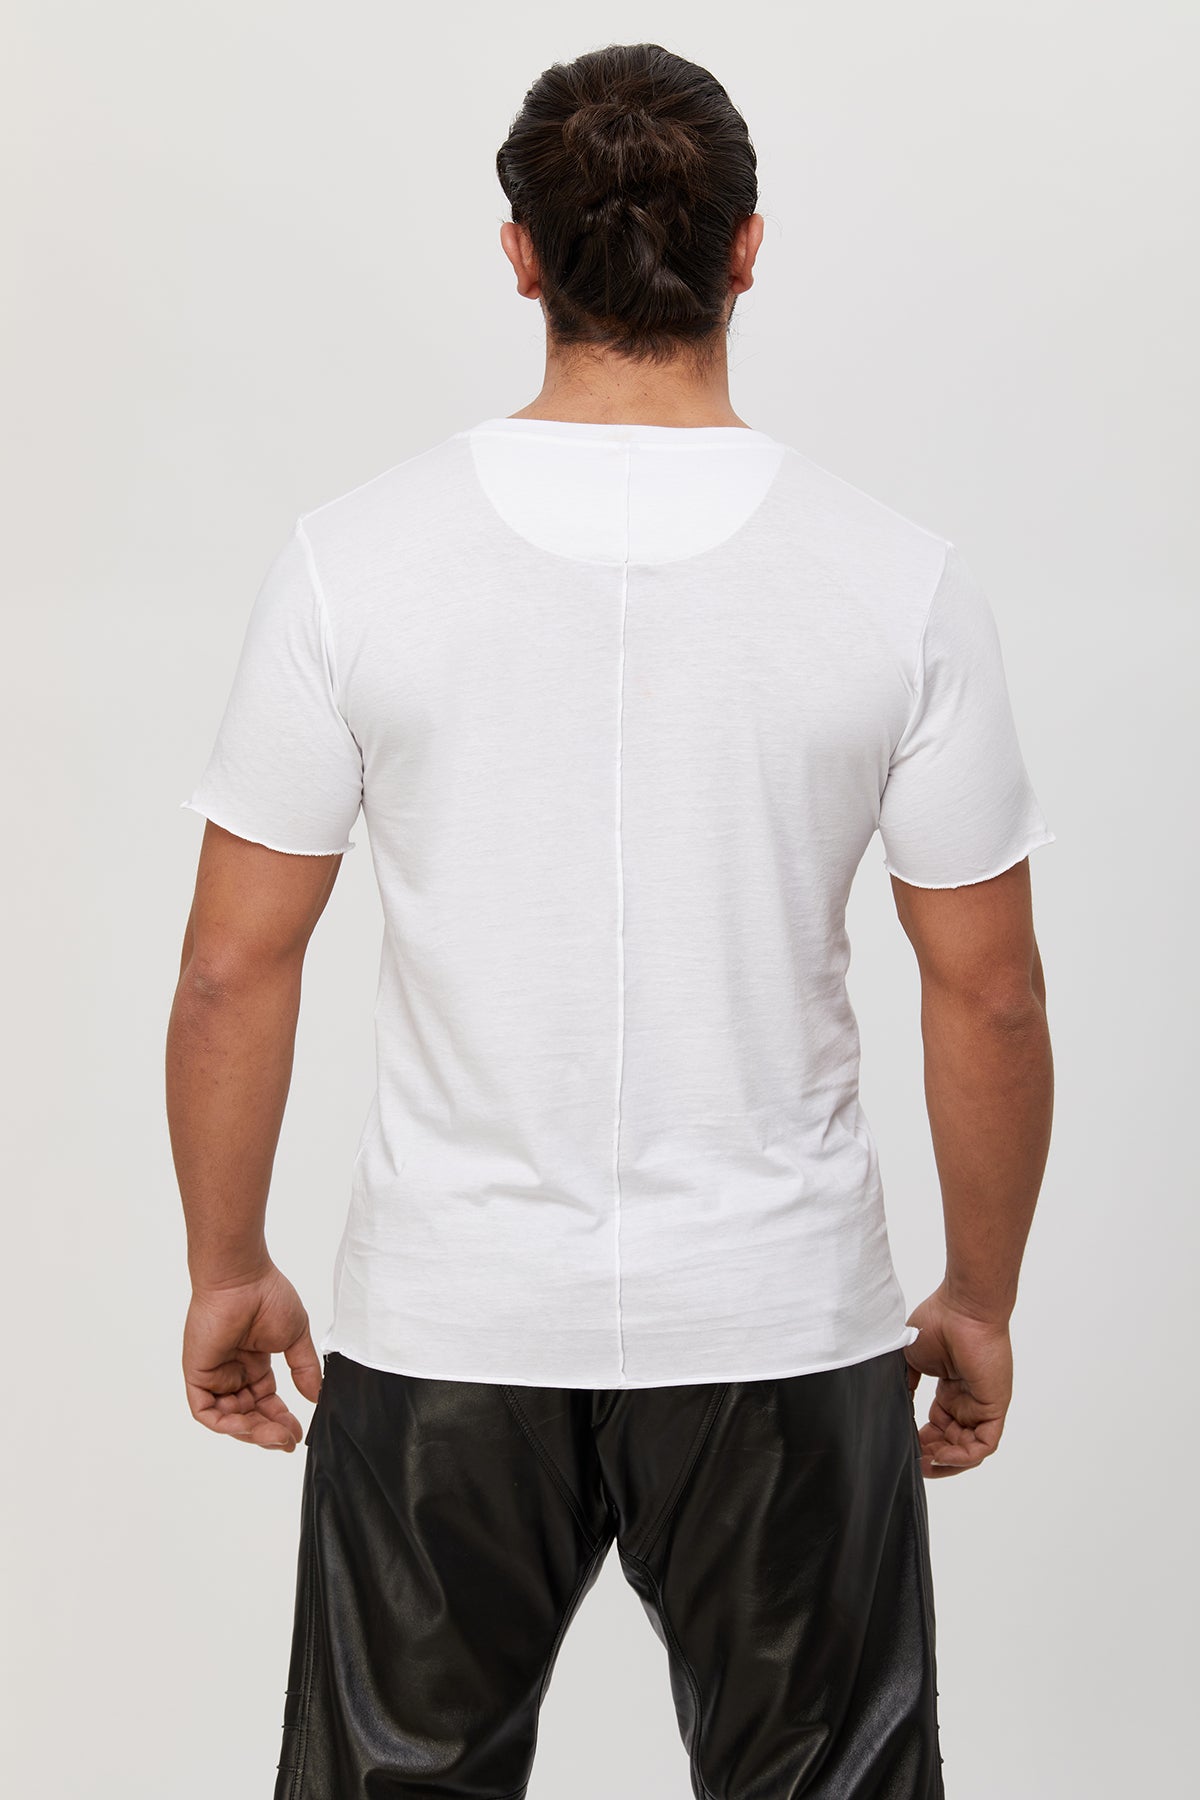 Men's T-shirts-Tops-Tees. 100 % Quality Turkish Pima cotton. Stylish, luxury. Big Winter Sale.